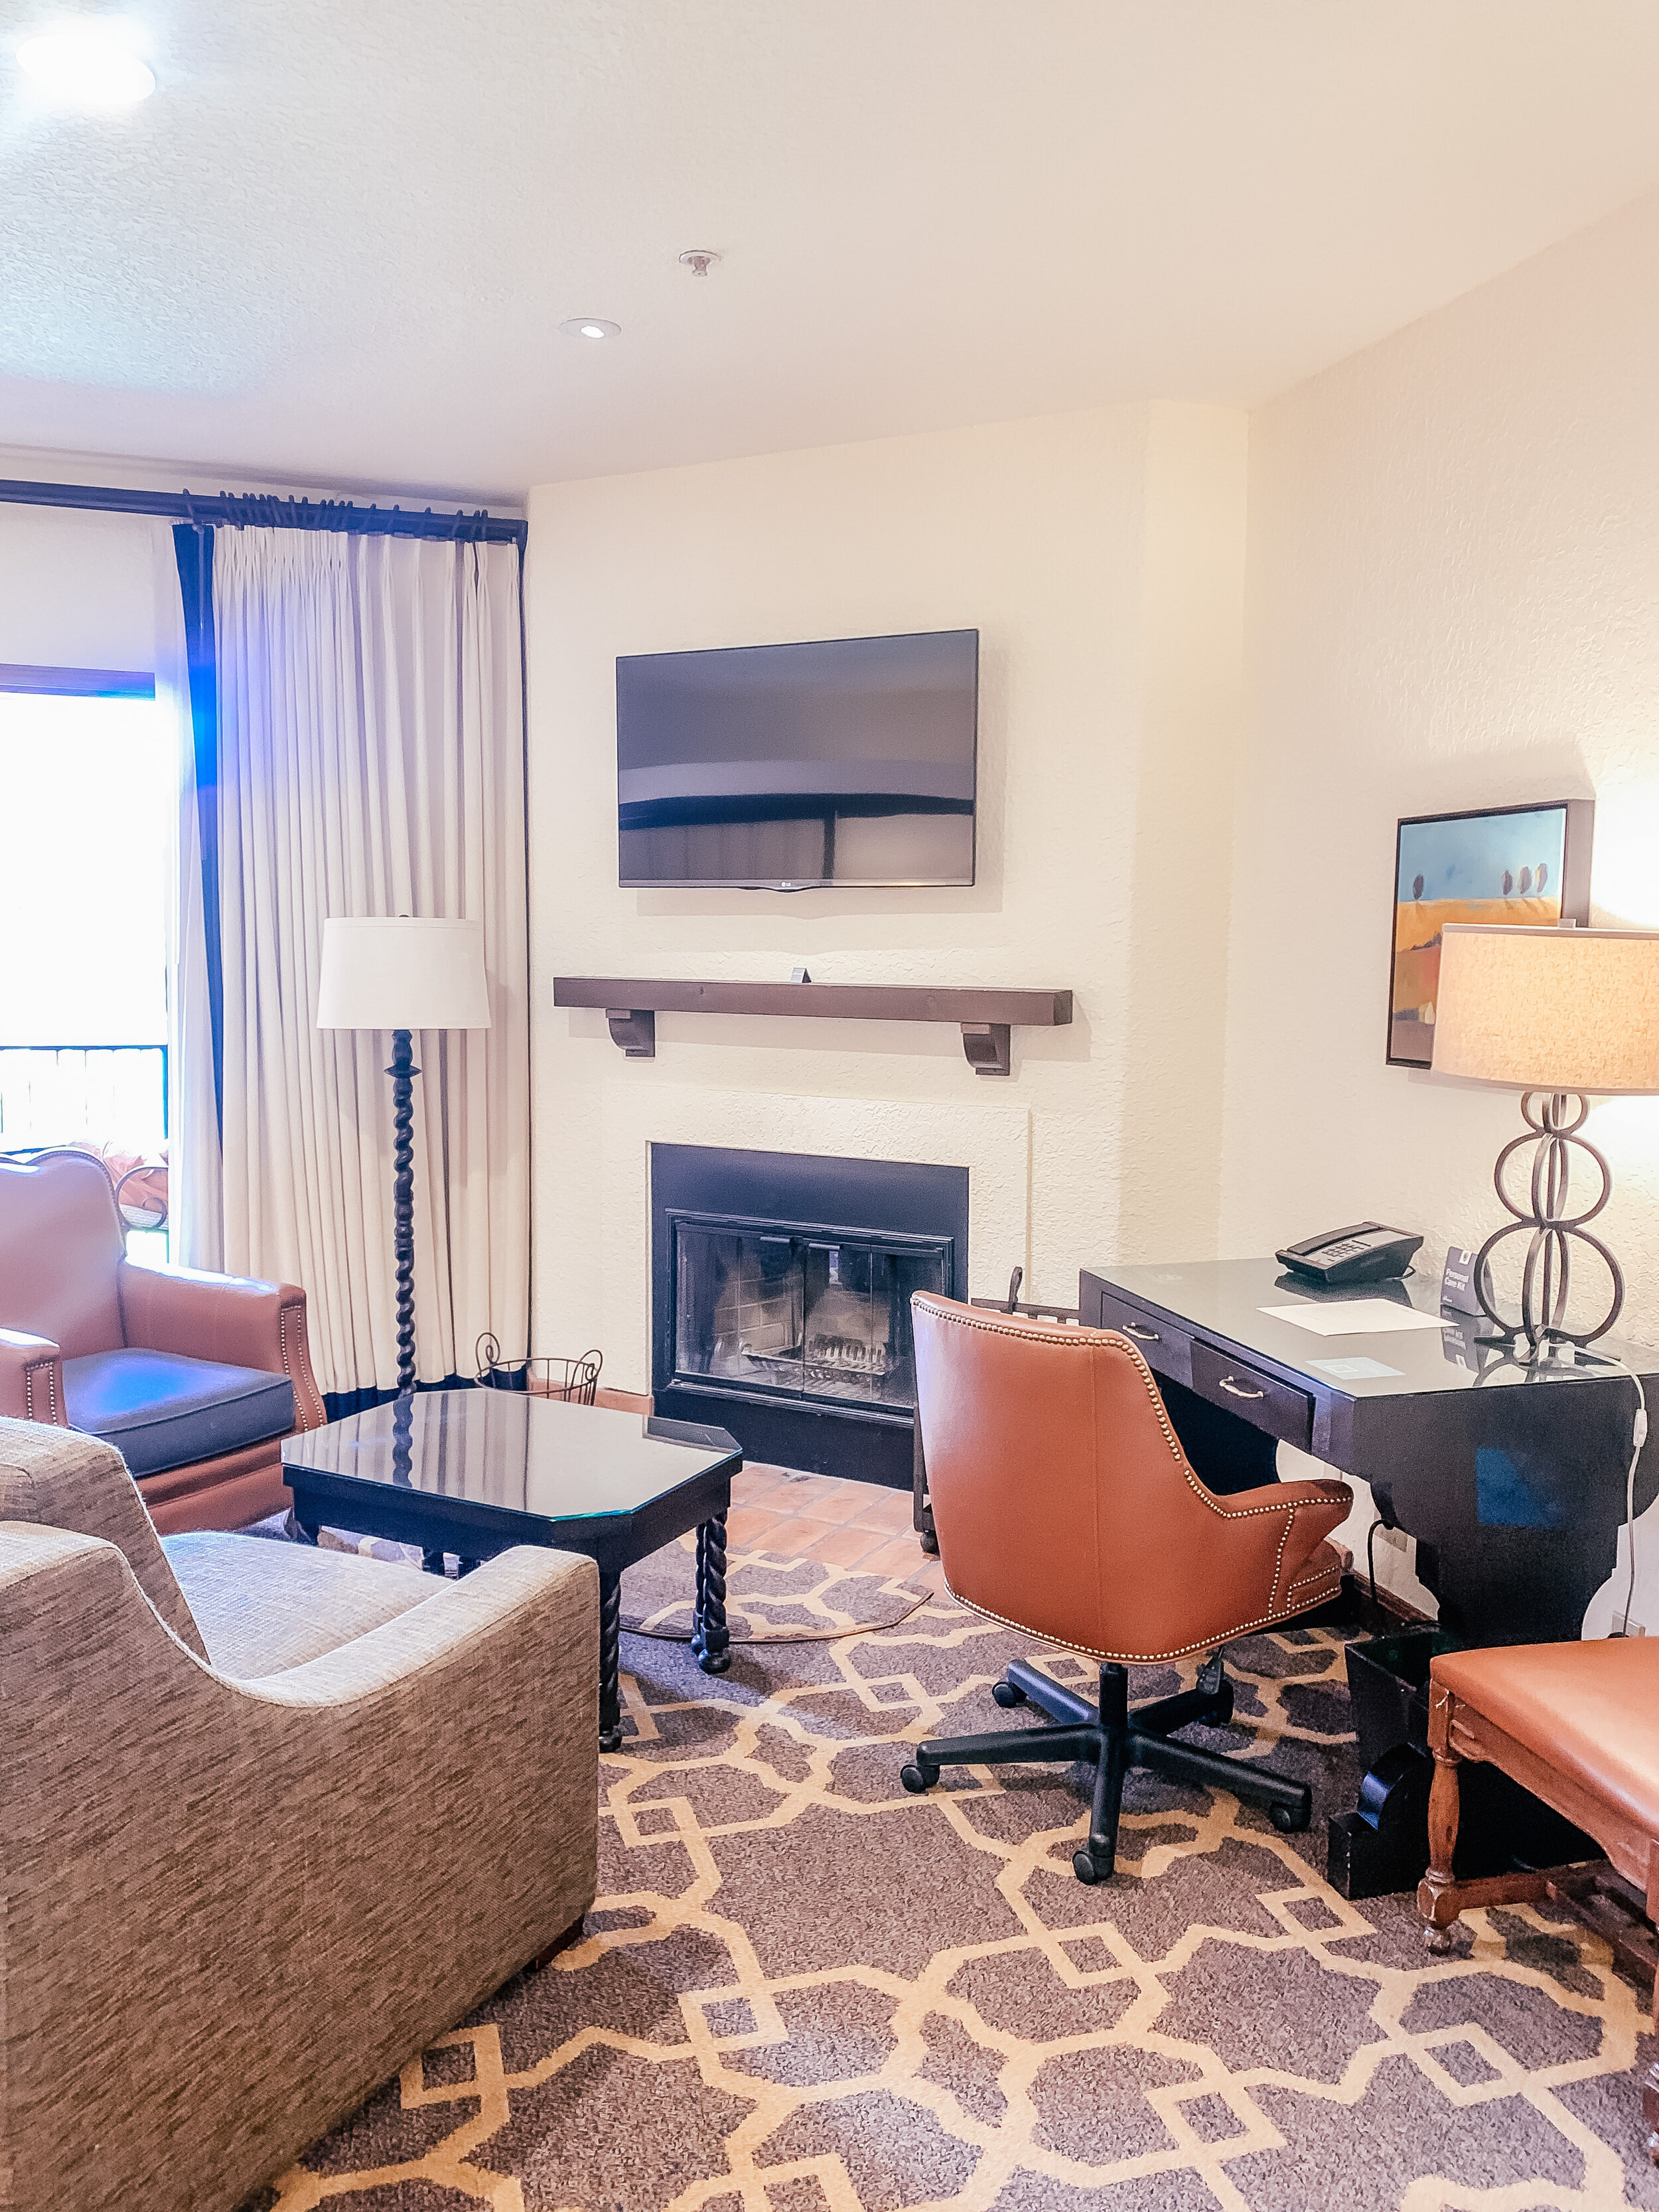 Fairmont Sonoma Mission Inn & Spa Review  - Rooms at the Fairmont Sonoma - Mission Suite - Sofa bed and fireplace.JPG